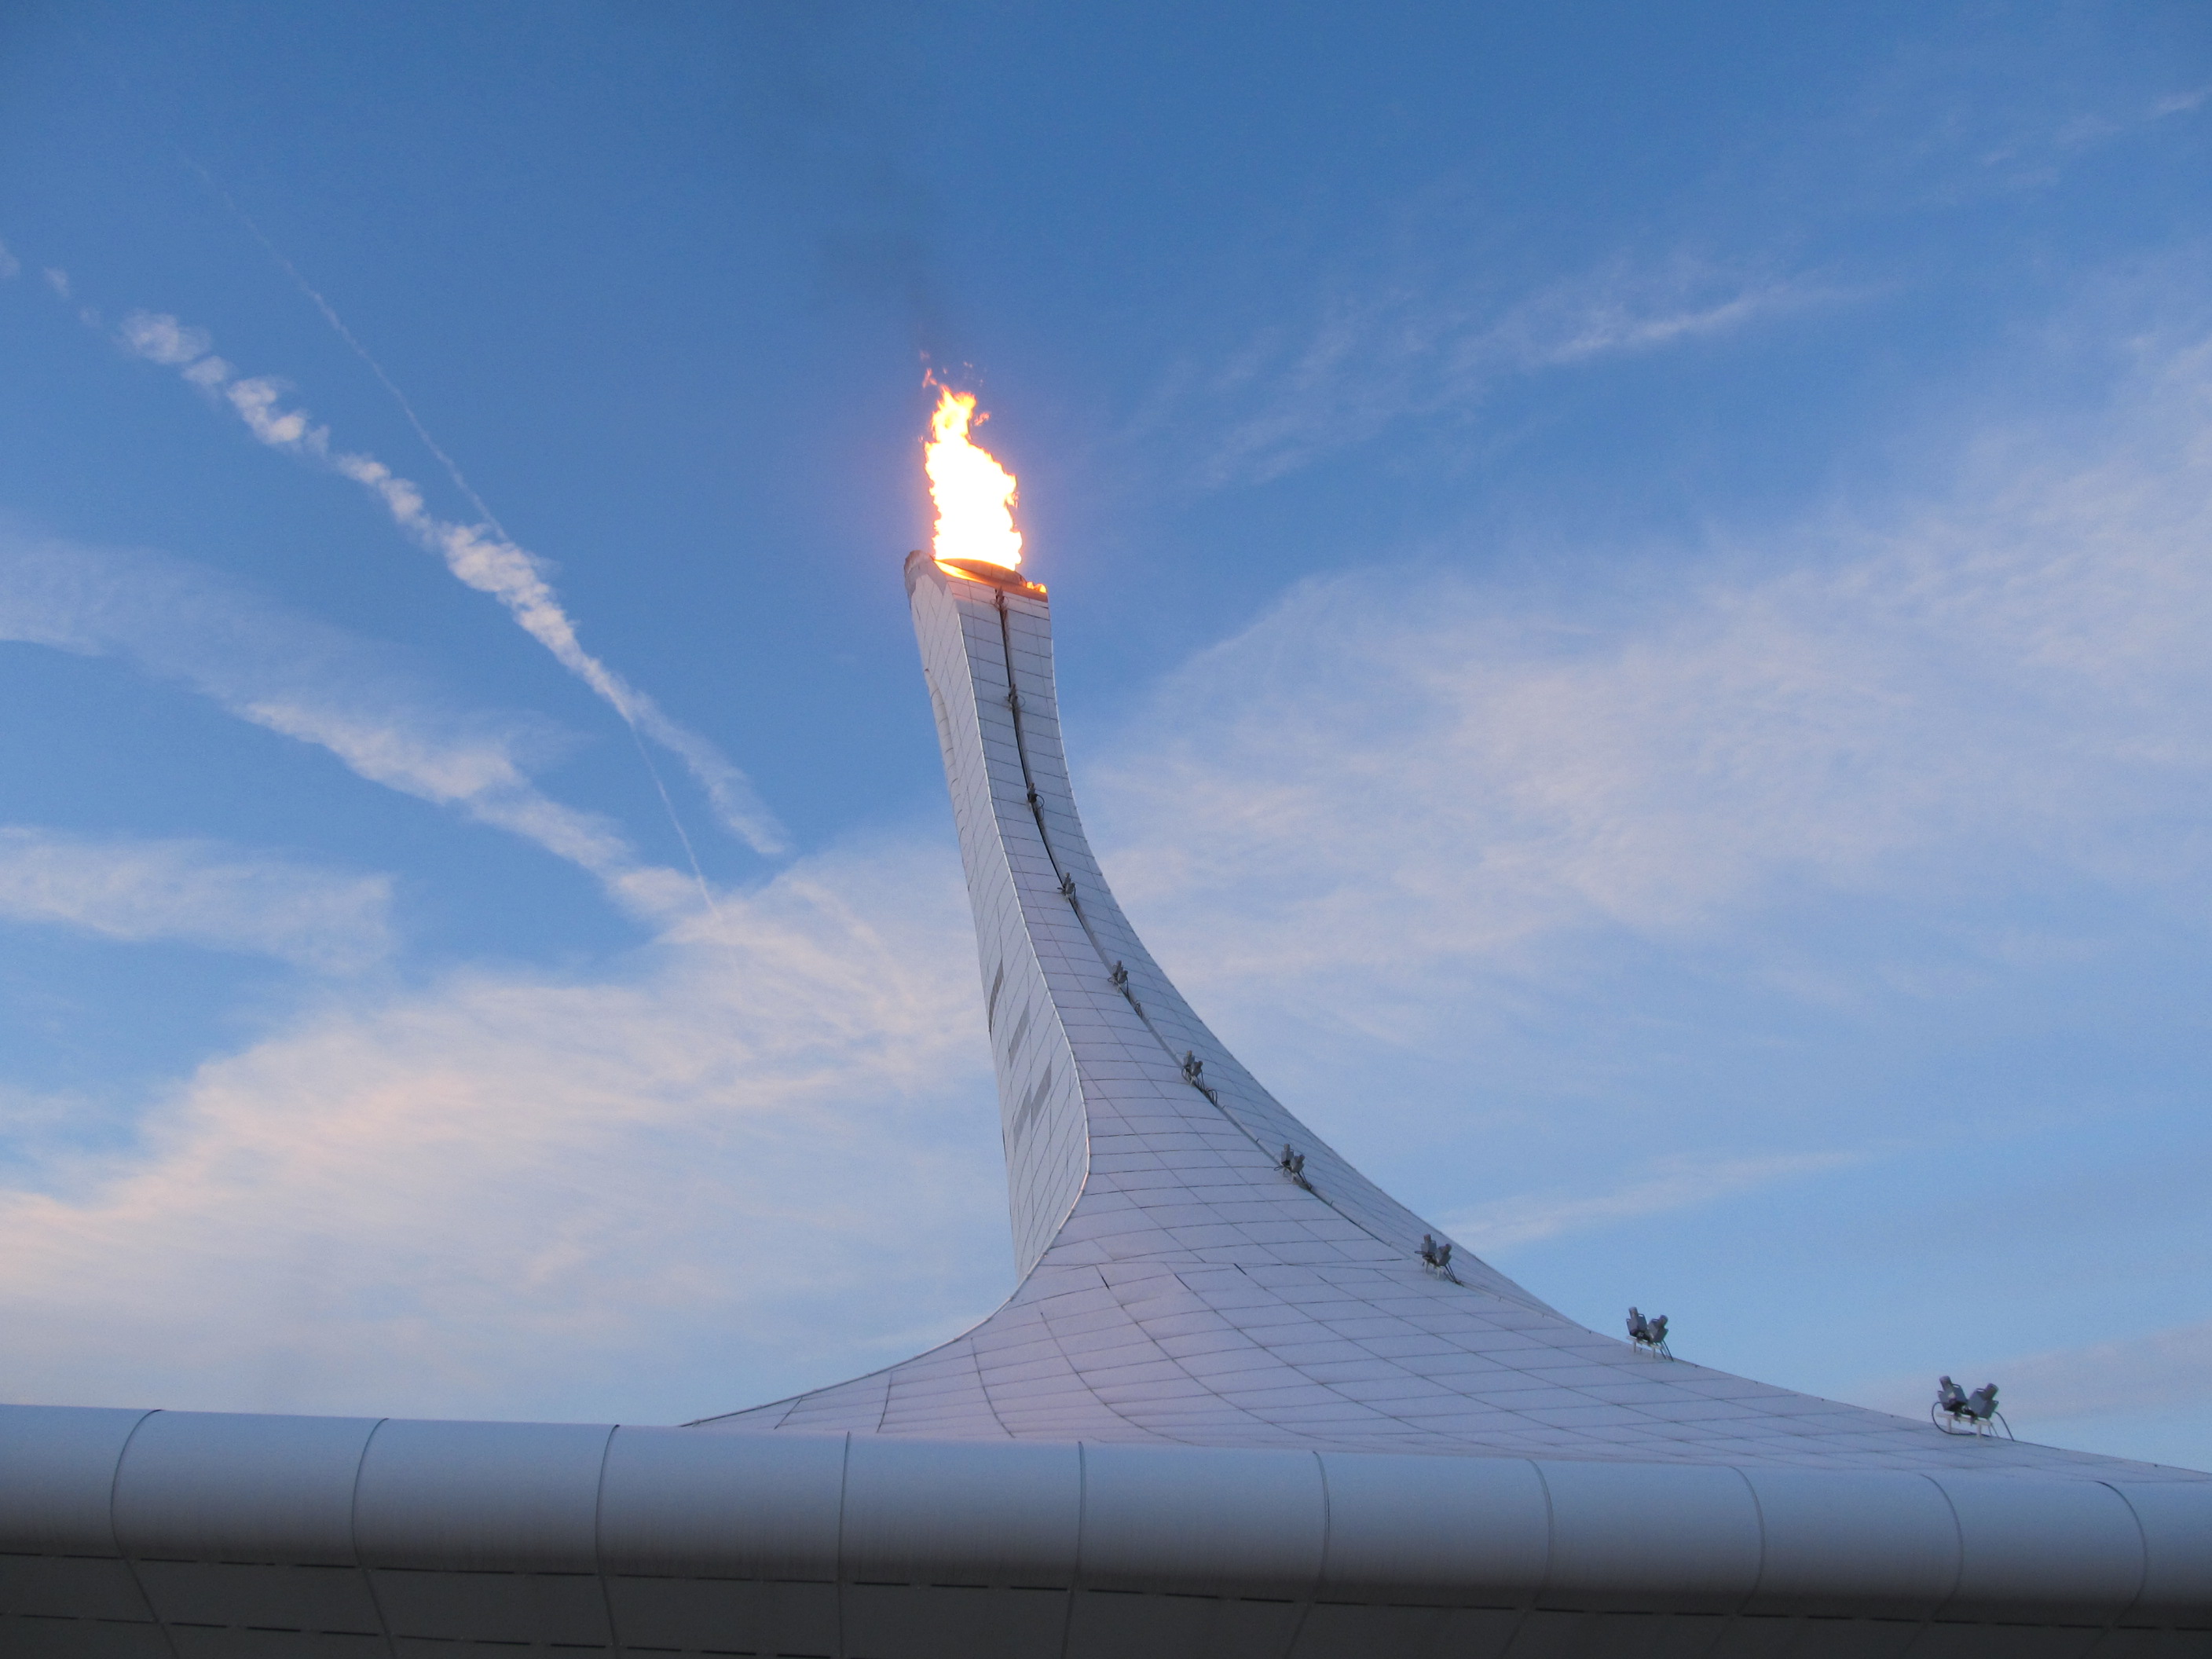 Олимпиаде в Сочи - 10 лет. Олимпийский парк от арматуры и котлована до арены FIFA 2018 и РПЛ